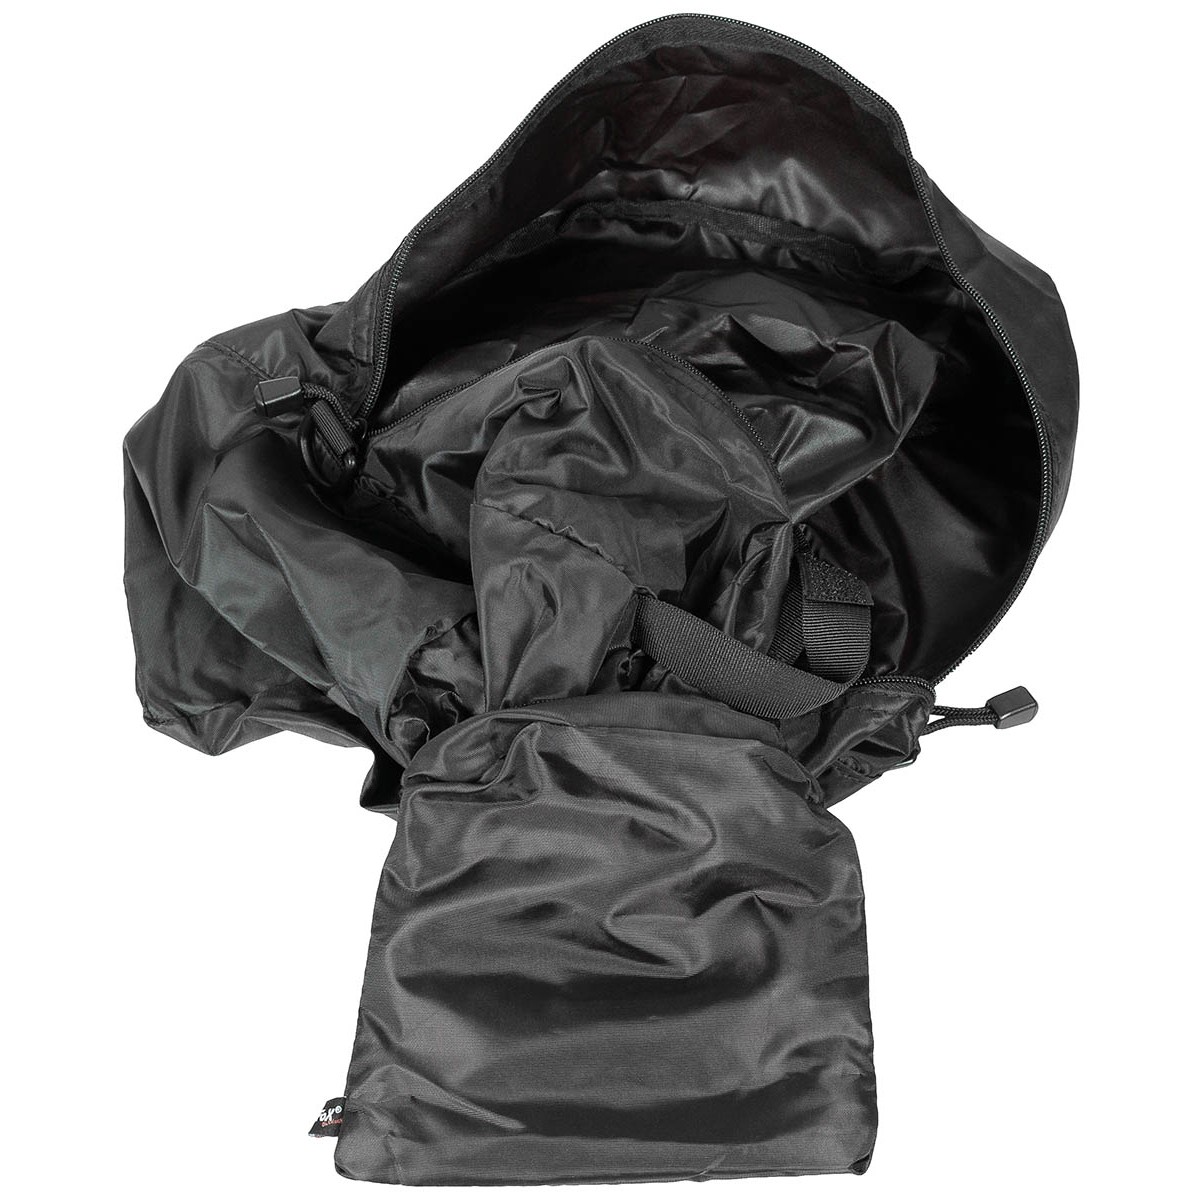 Сумка MFH Fox Outdoor Garment Bag 42 л - Black